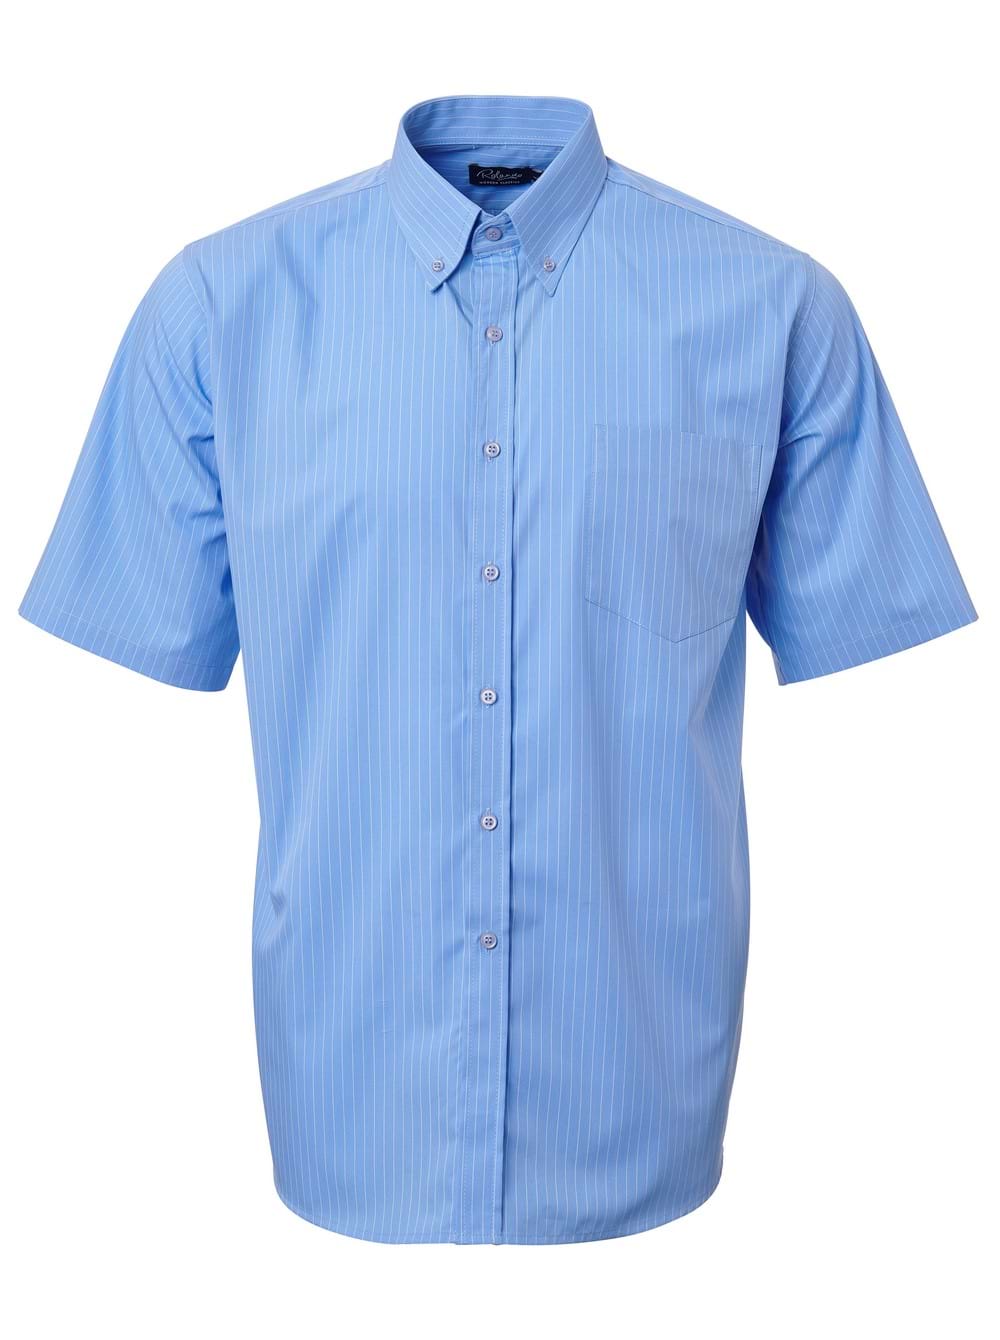 Mens K202 Stripe S/S Shirt - Powder blue | Creative Brands Africa